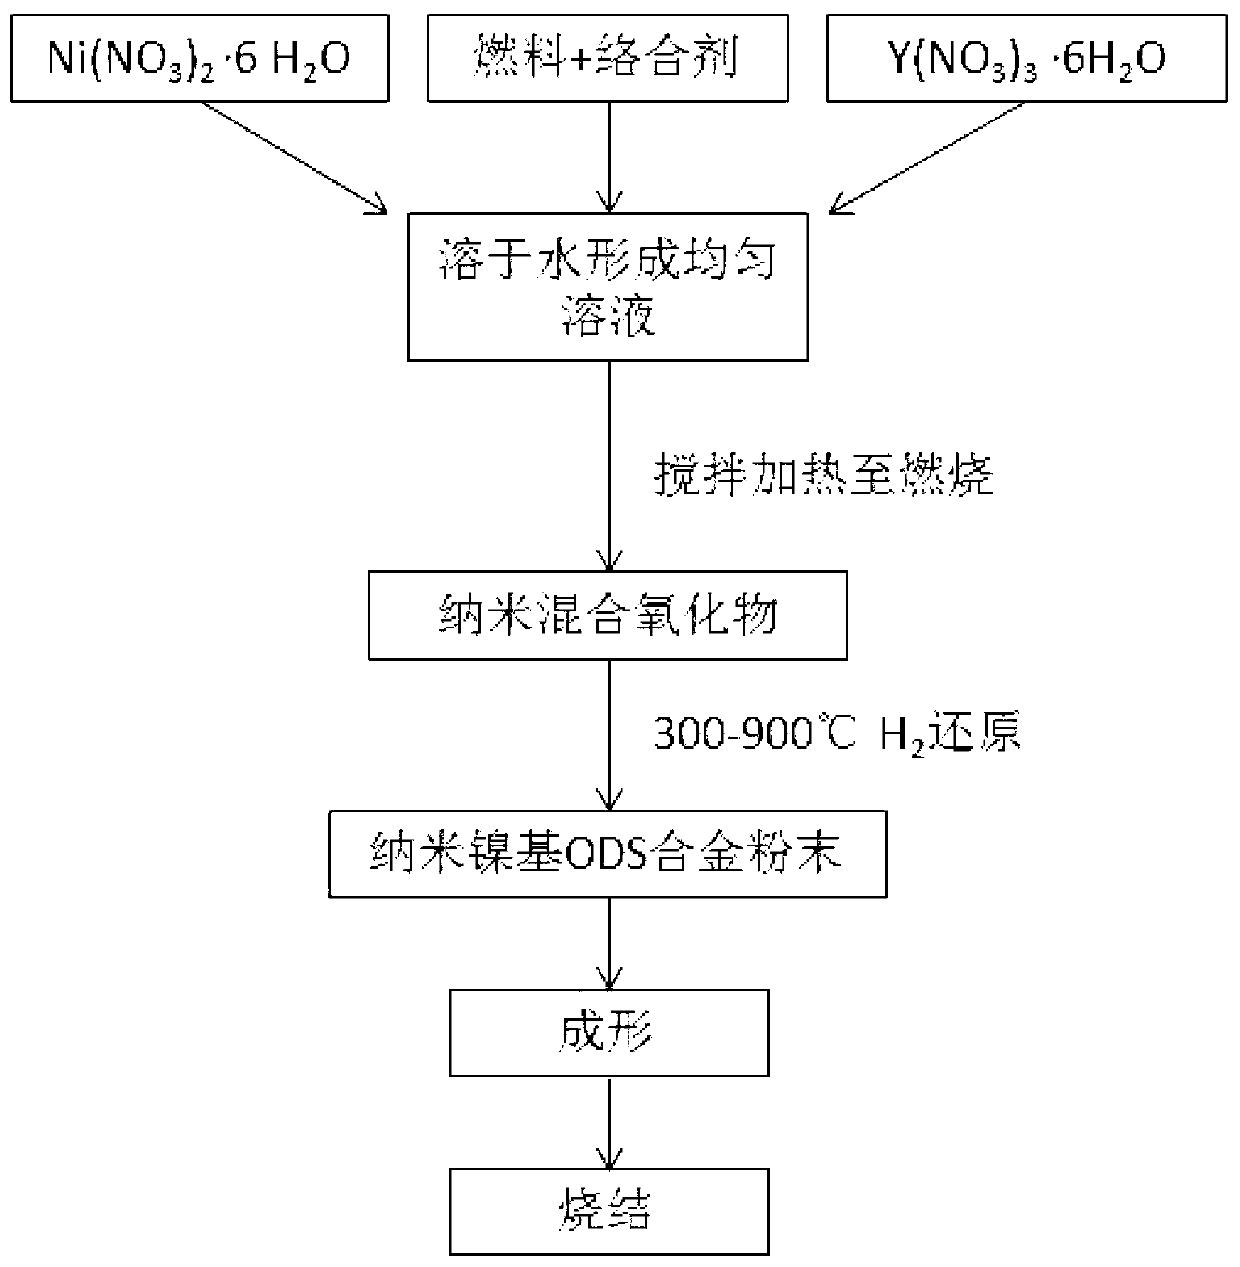 Method for preparing porous nickel-based ODS ( Oxide Dispersion Strengthened) alloy